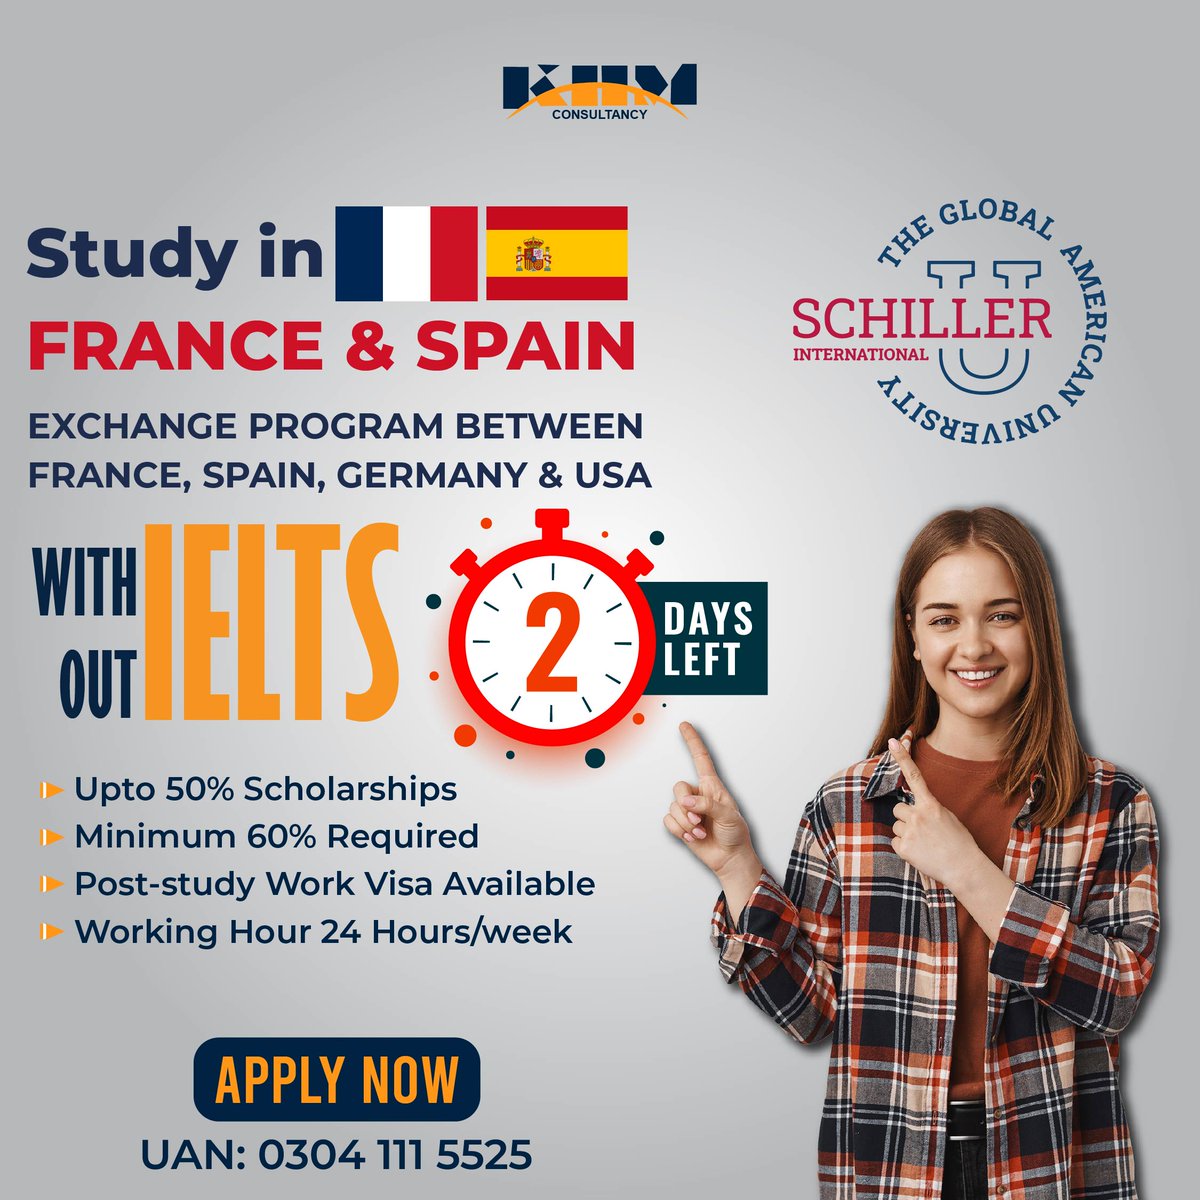 Hurry Up!
2 Days Left!

Study In France, Spain, Germany and USA.
#studyinUSA2024 #studyinFrance #studyinspain #studyinitaly #studyinUK #studyabroadconsultancy #StudyinFrance #studyincanada #studyabroad #studymotivation #Ukvisa #NewBeginnings #studyabroad #PSW #scholarships